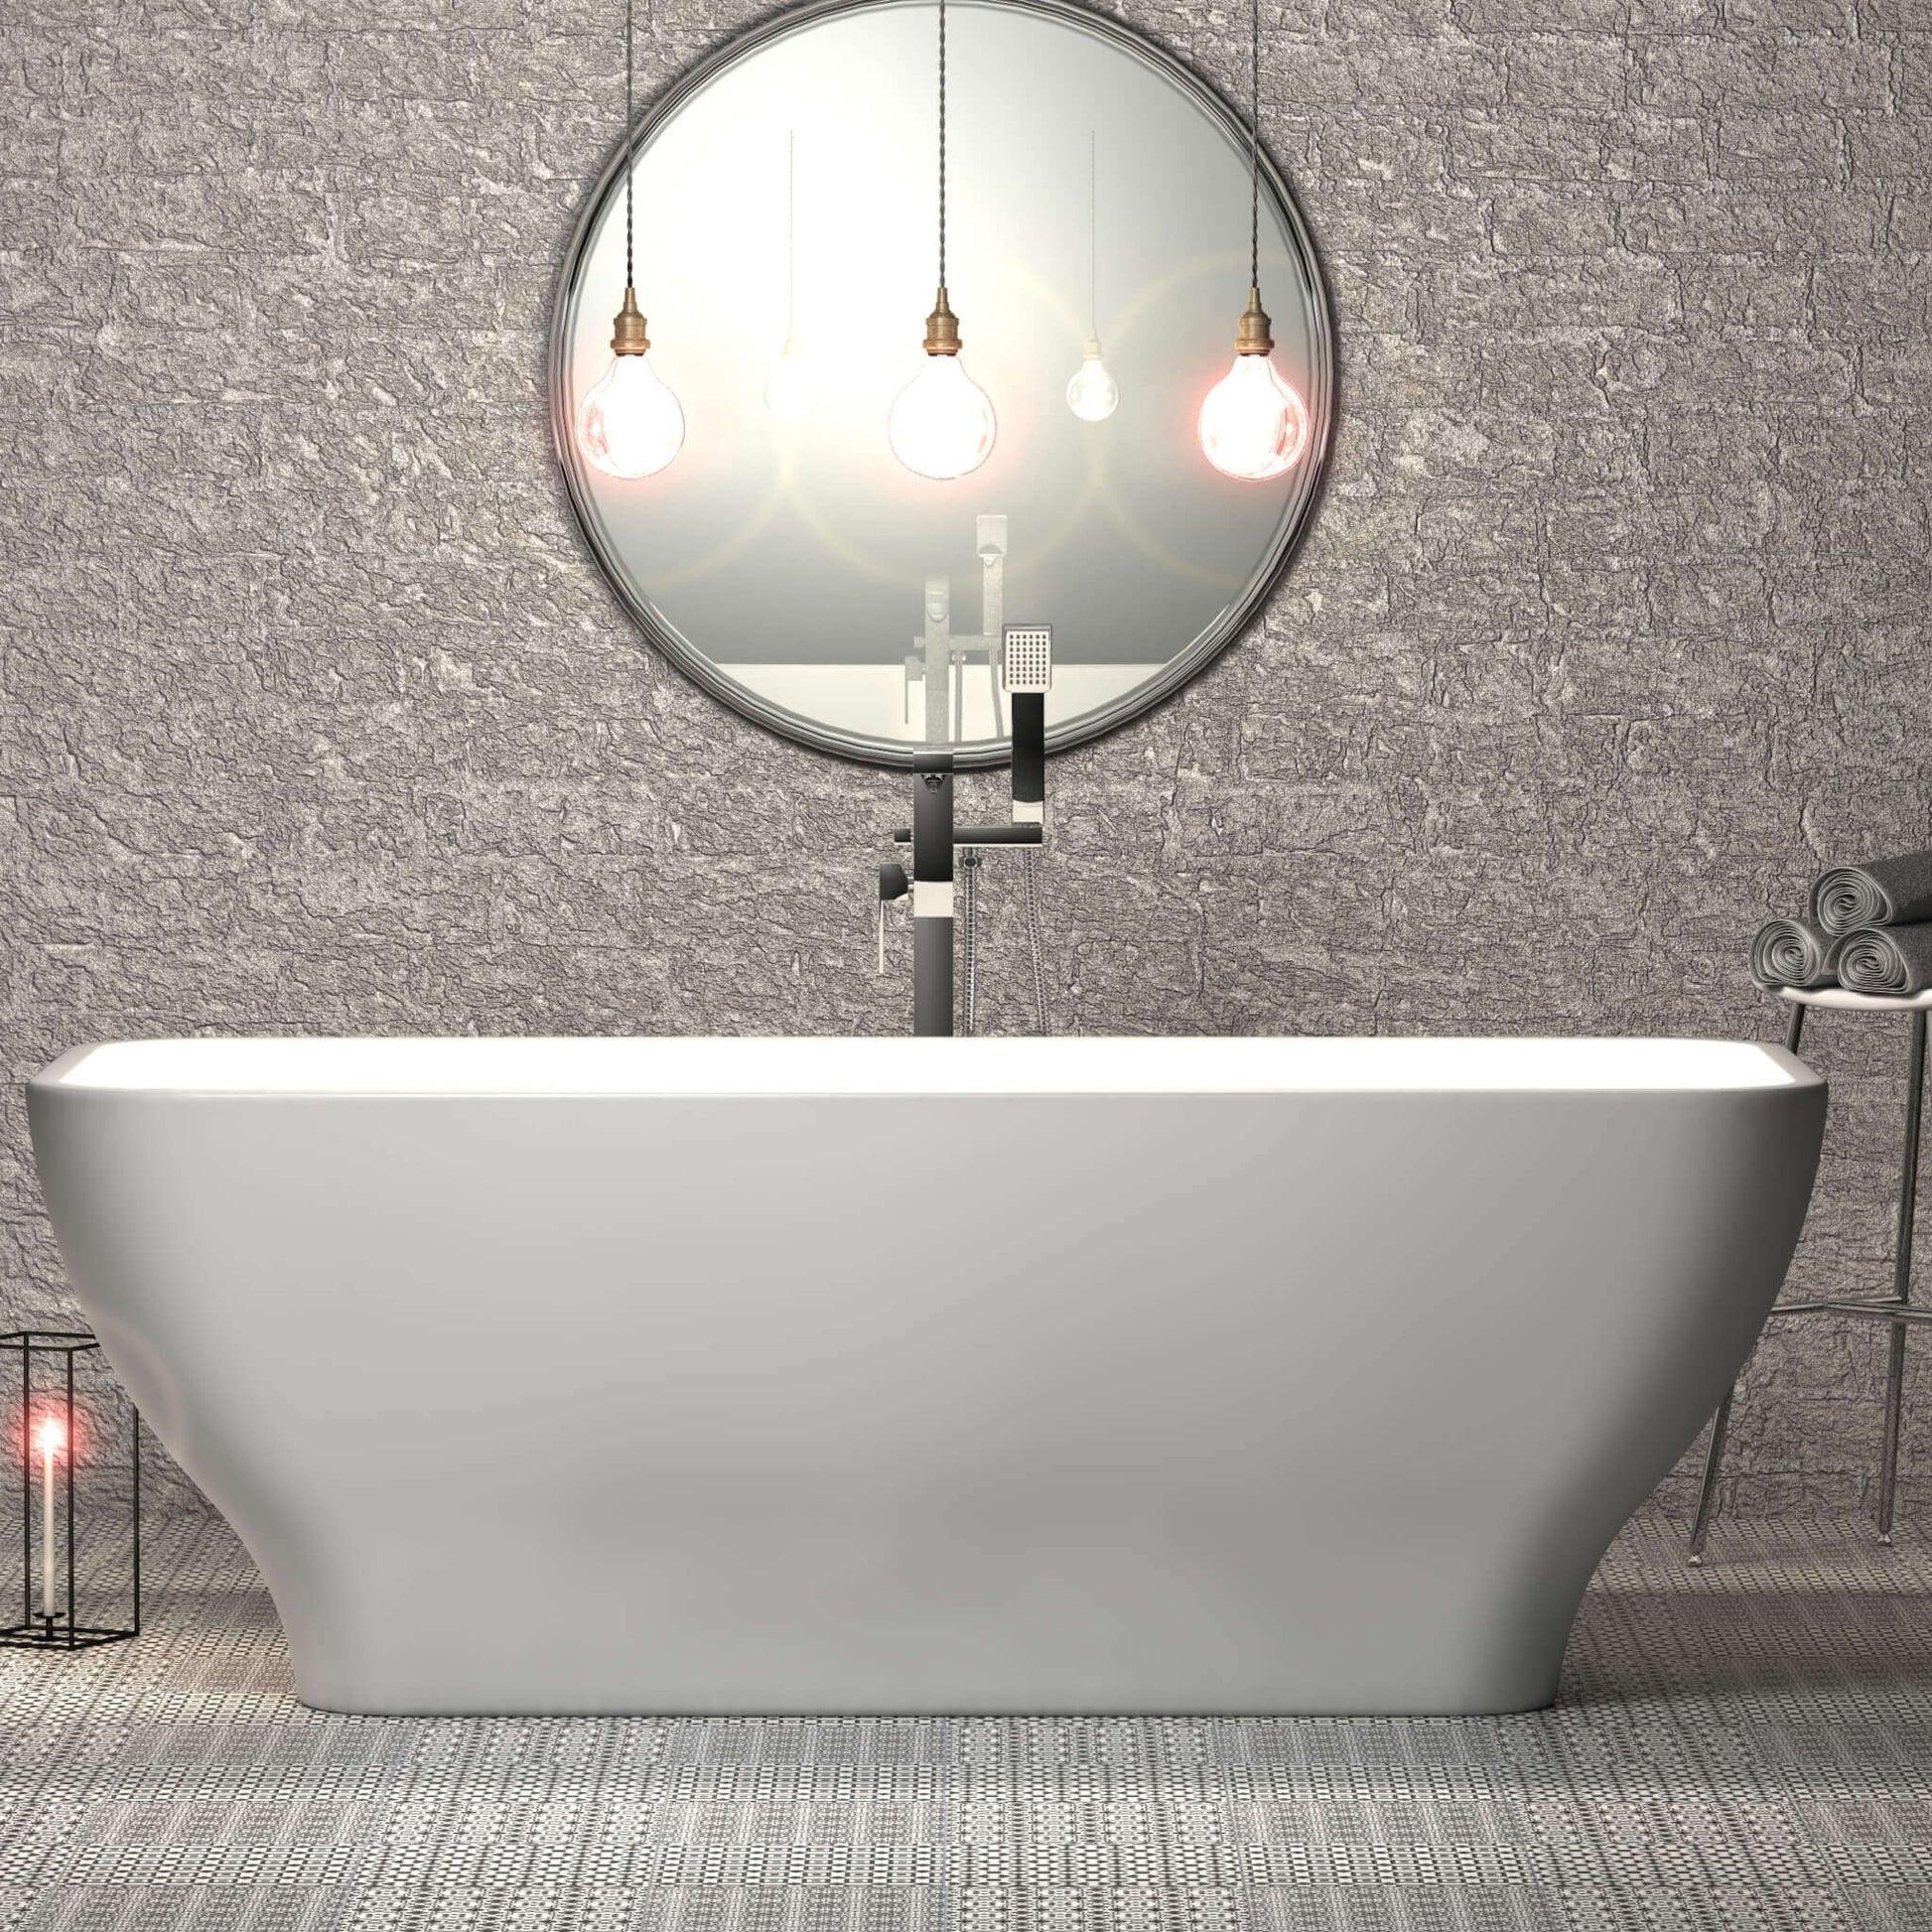 Charlotte Edwards Thebe Gloss White Freestanding Bath - bathlux.co.uk